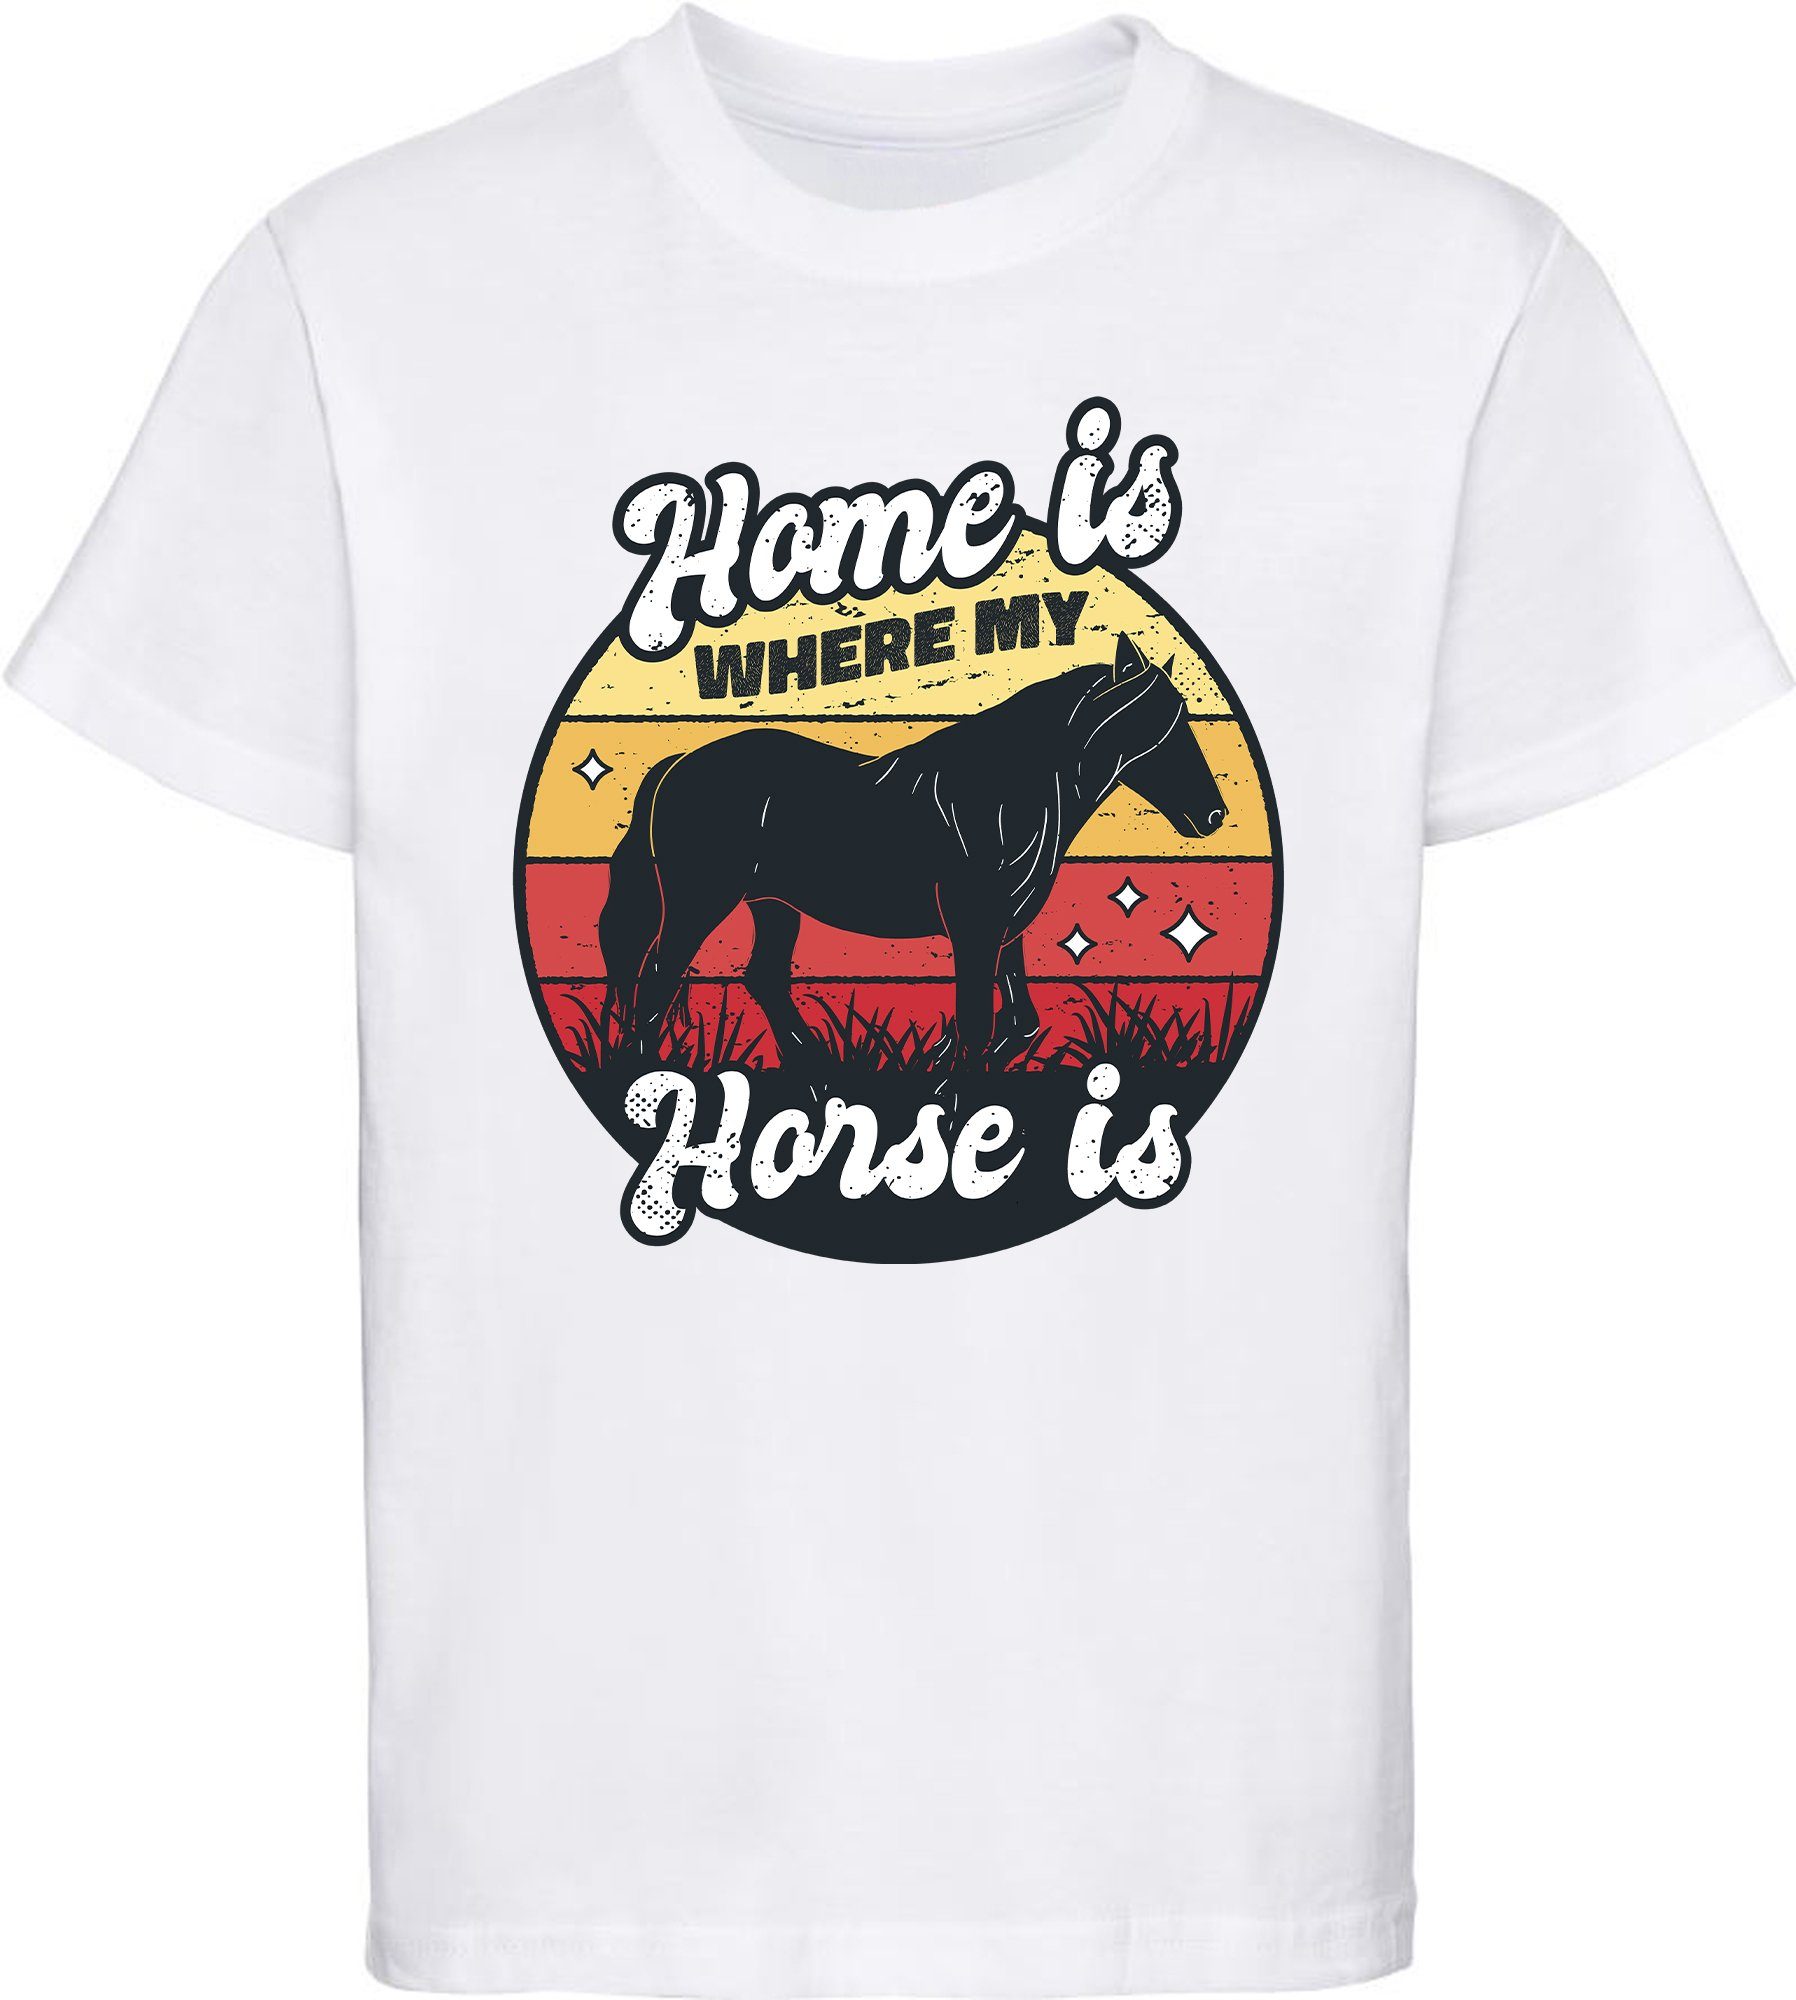 MyDesign24 Print-Shirt bedrucktes mit is Baumwollshirt my - i156 where Home Aufdruck, Mädchen horse T-Shirt is weiss